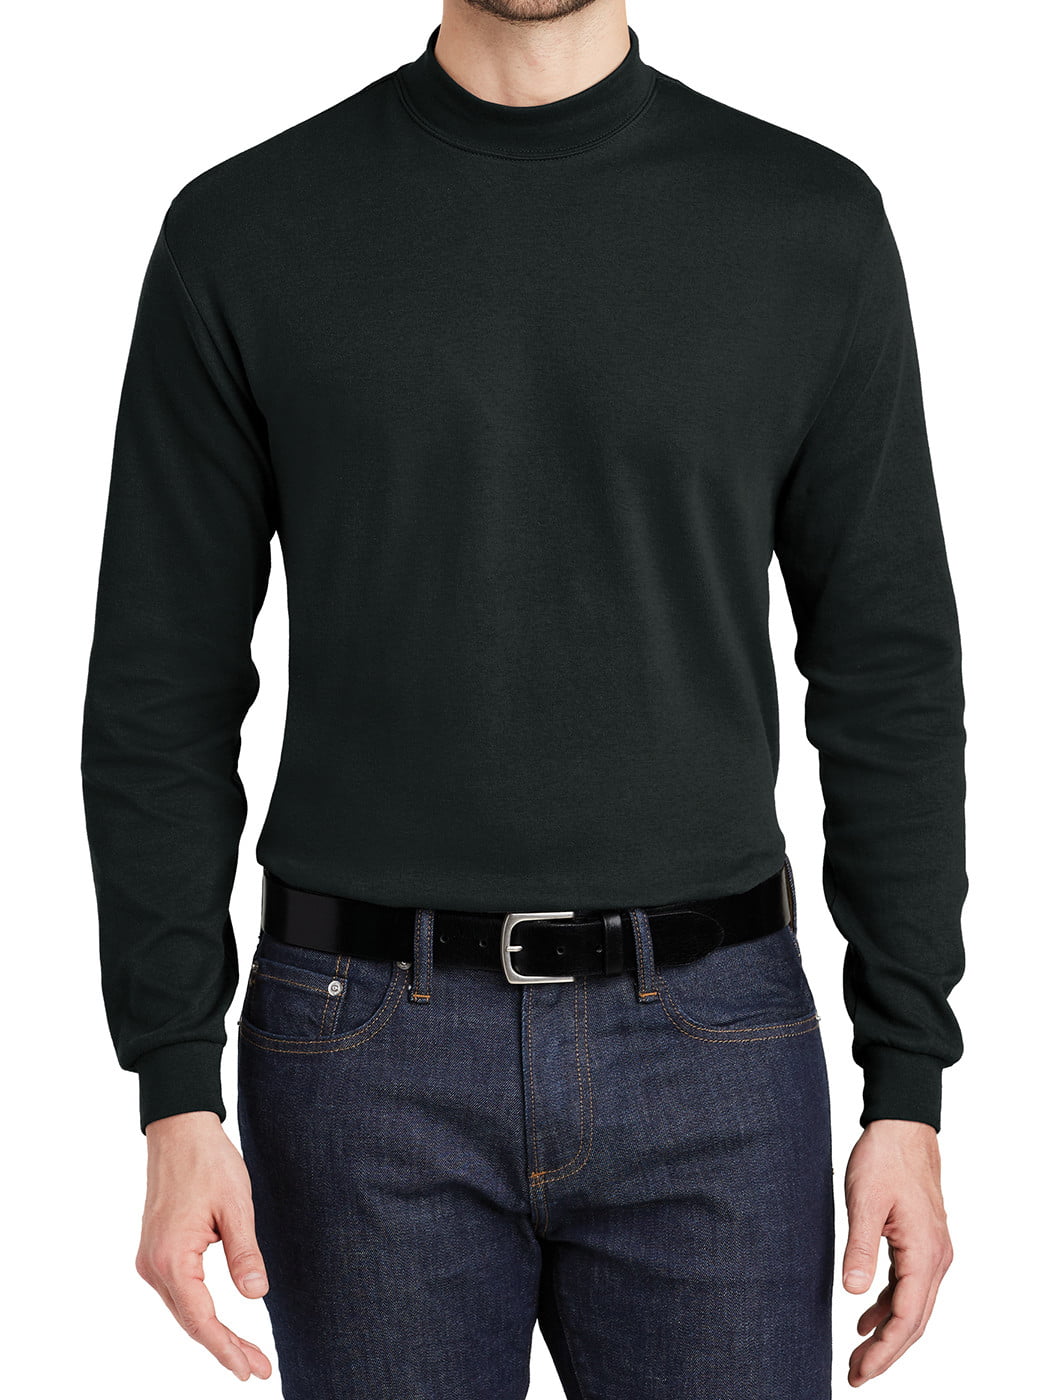 Mafoose - Mafoose Men's Interlock Knit Mock Turtleneck Sweaters Black L ...